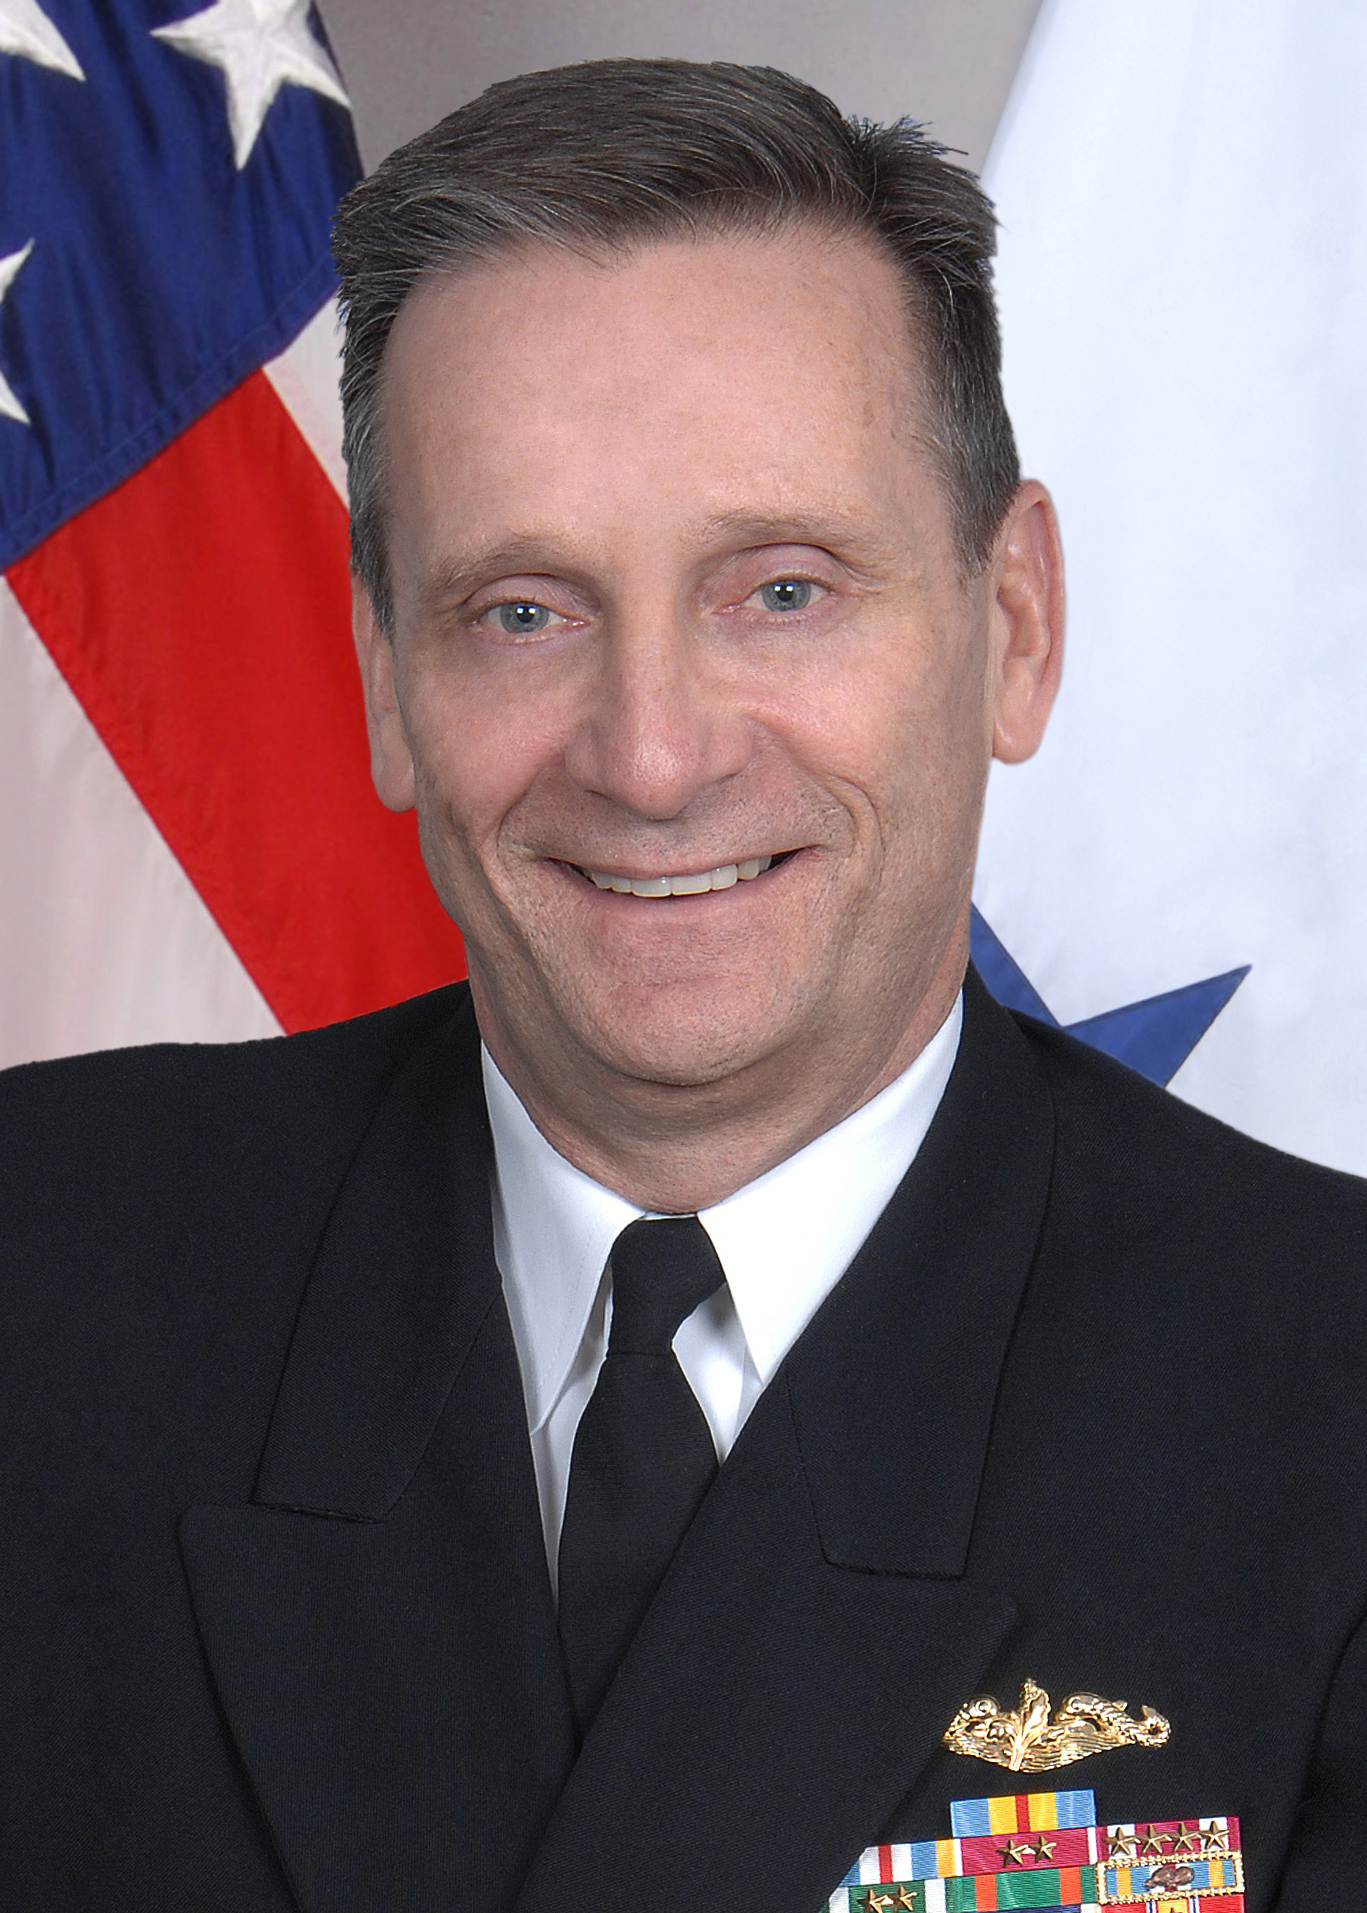 Navy Vice Adm. Mark Harnitchek